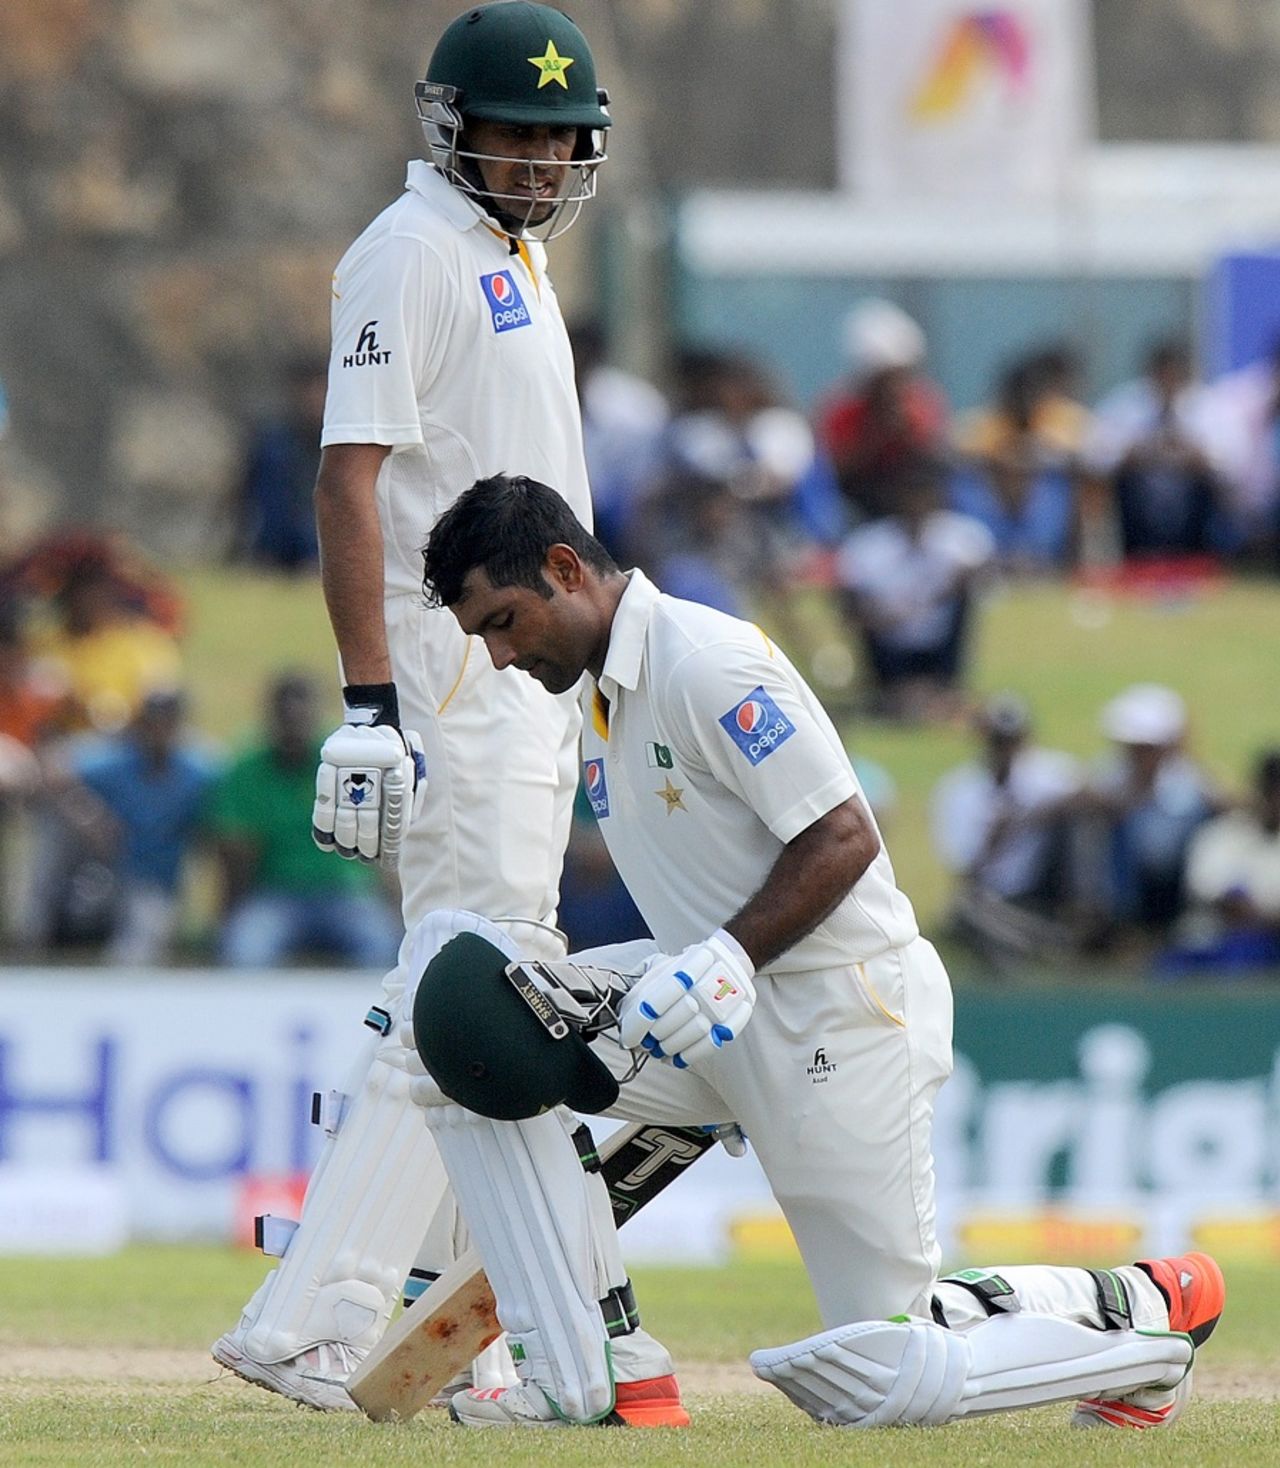 Asad Shafiq celebrates after scoring his century, Sri Lanka v Pakistan, 1st Test, Galle, 4th day, June 20, 2015